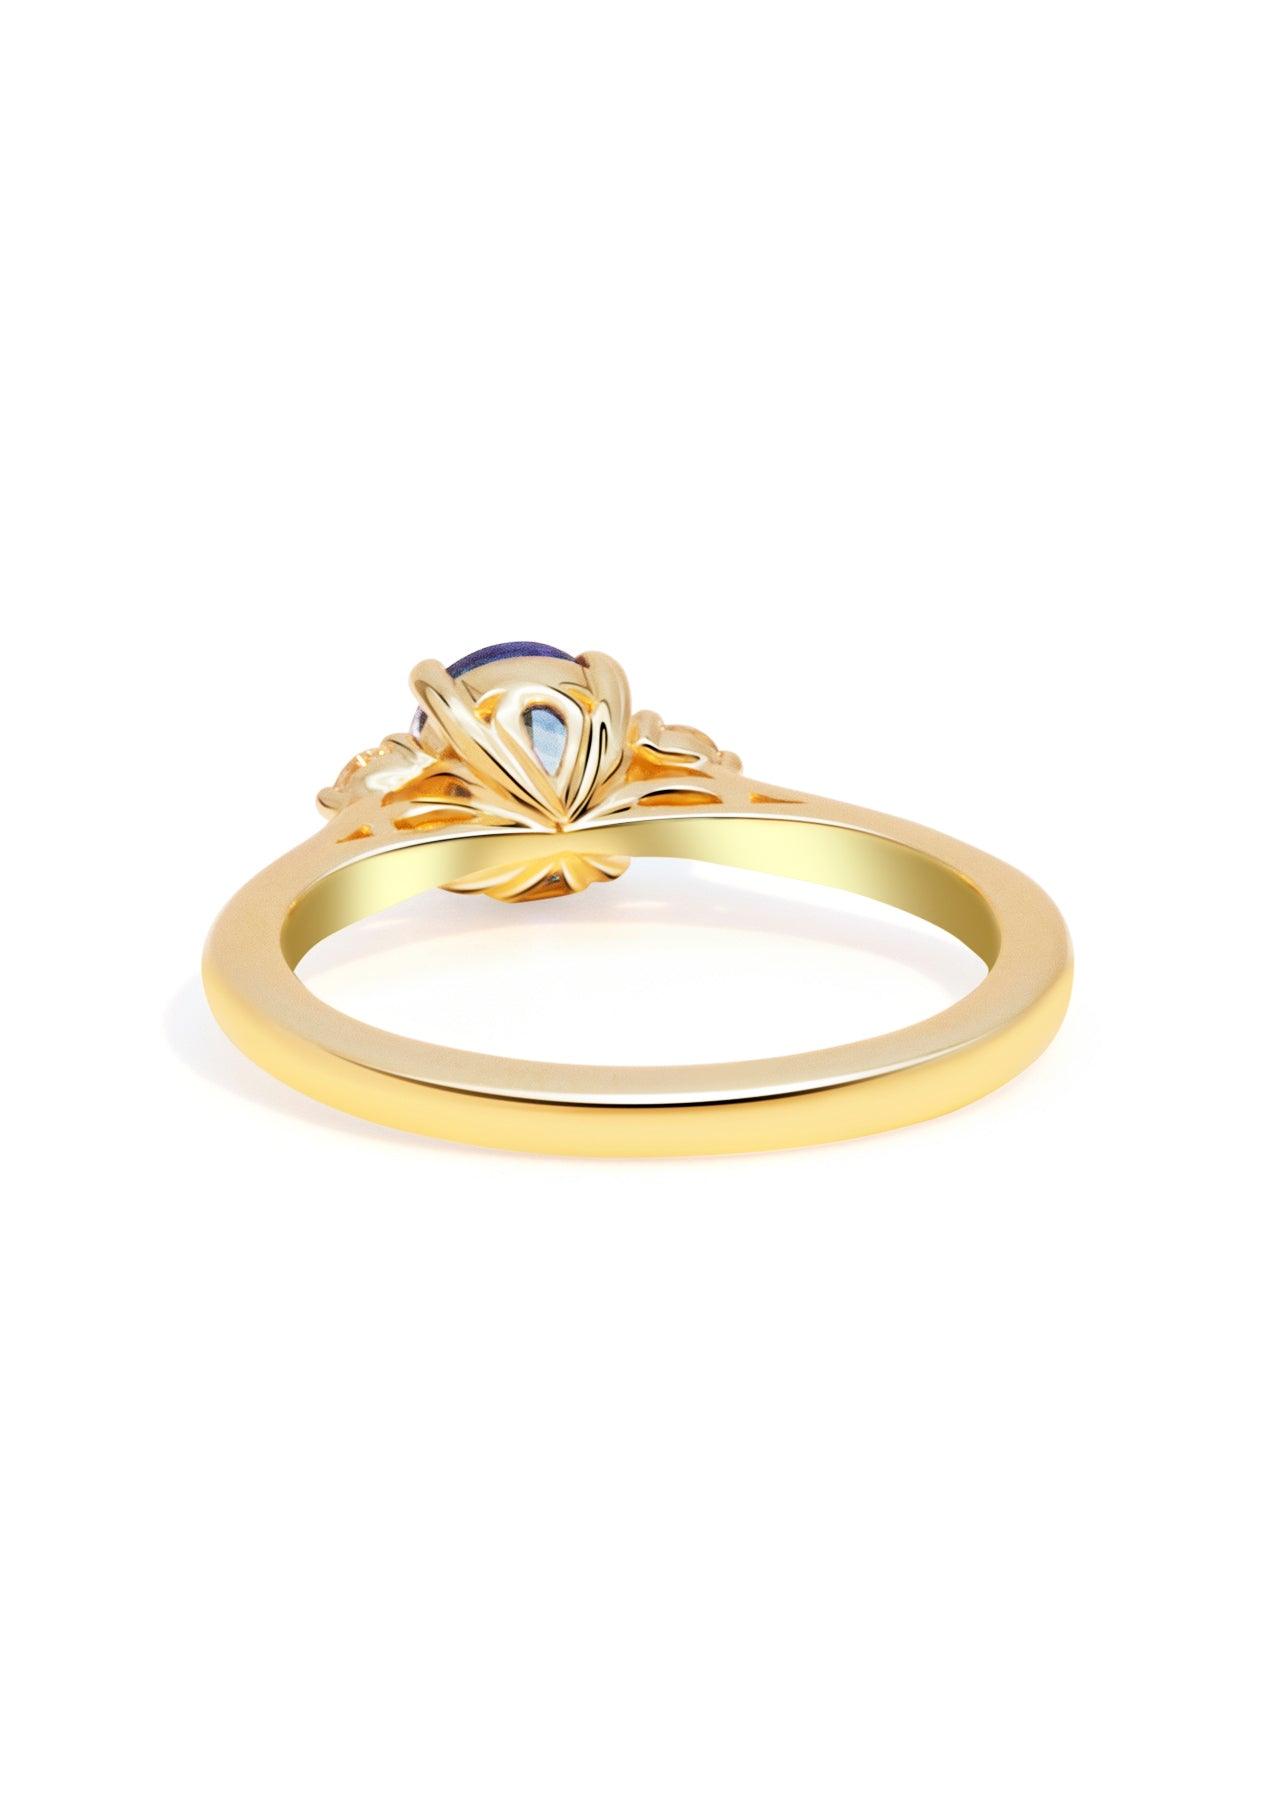 The Ada 1.31ct Ceylon Sapphire Ring